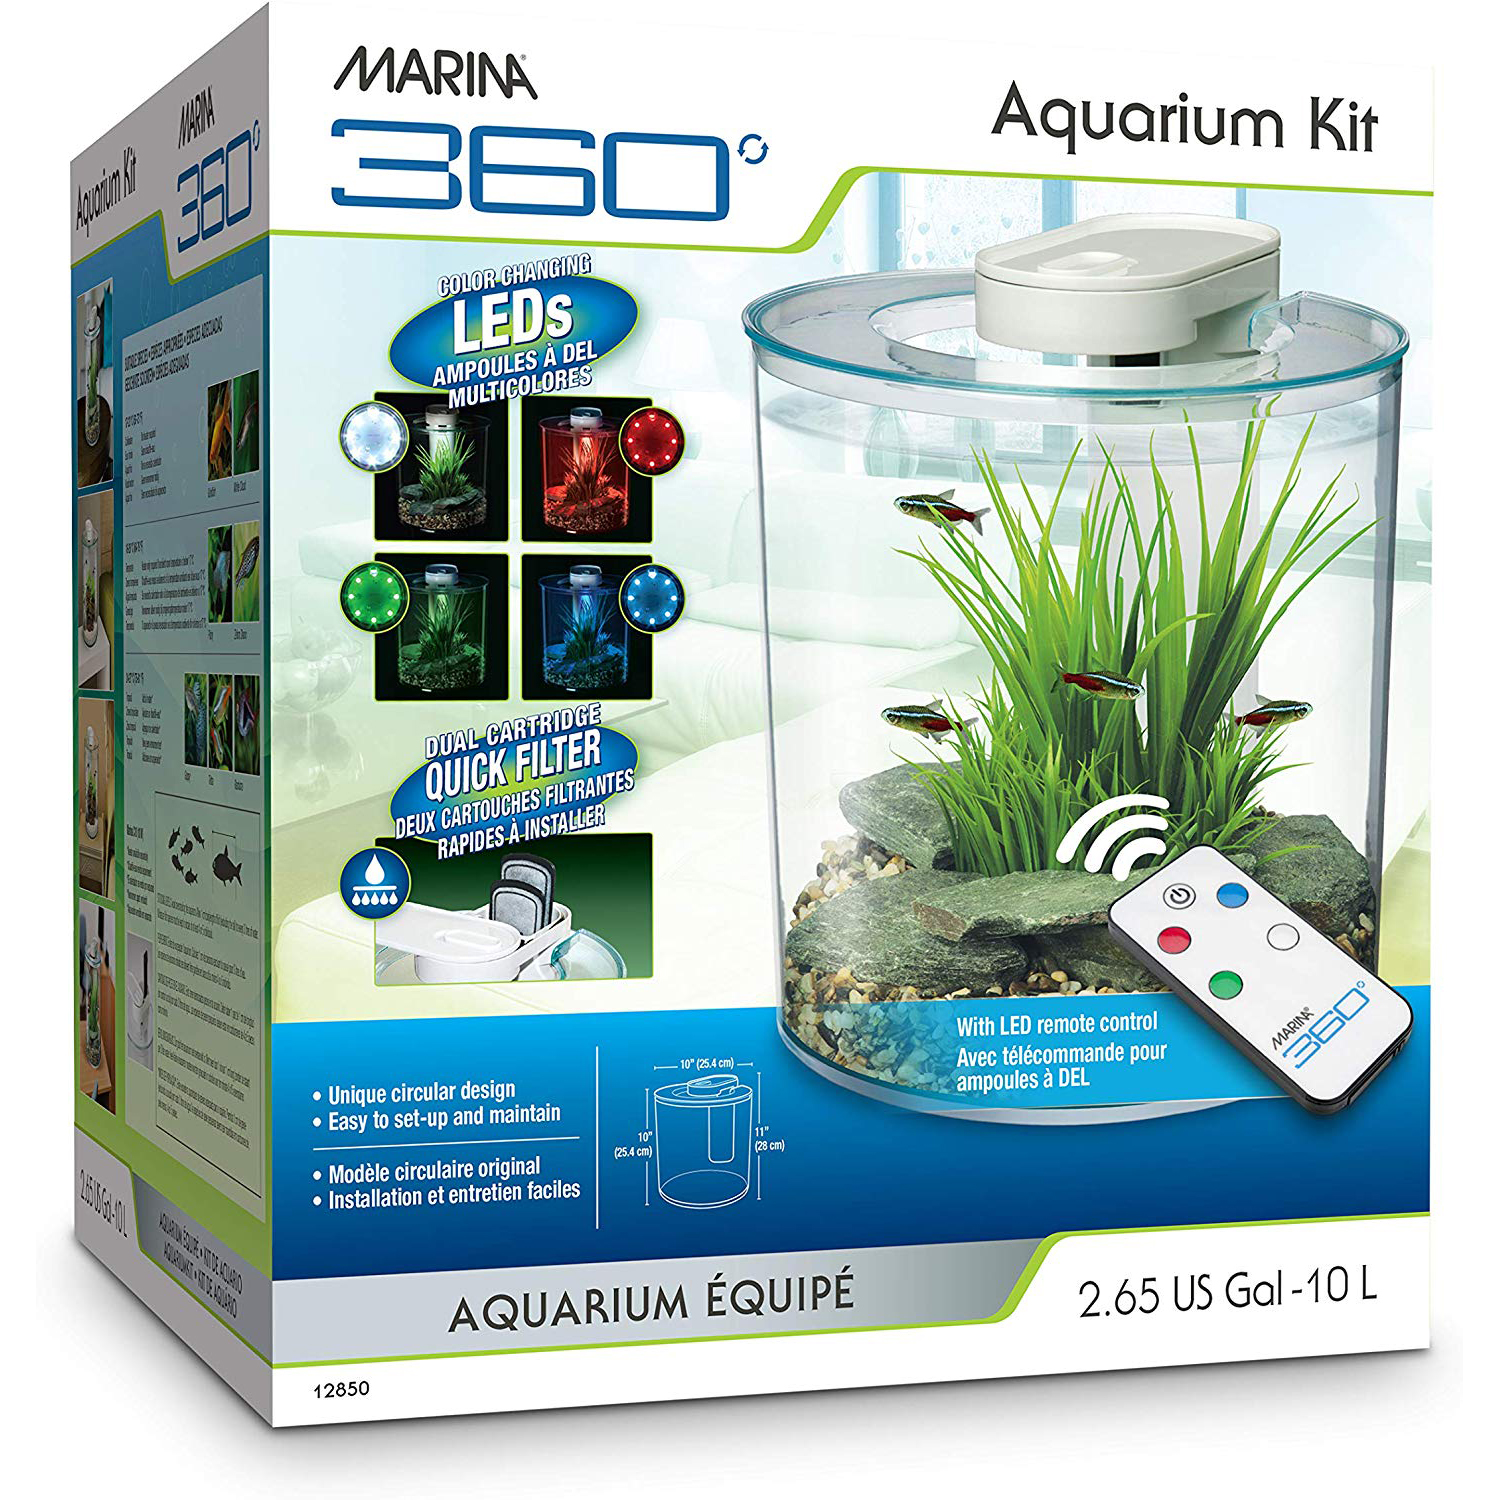 Marine aquarium. Аквариум 3 Tank Kit. Кит в аквариуме. Цветы в аквариуме. Мини аквариум 10л.